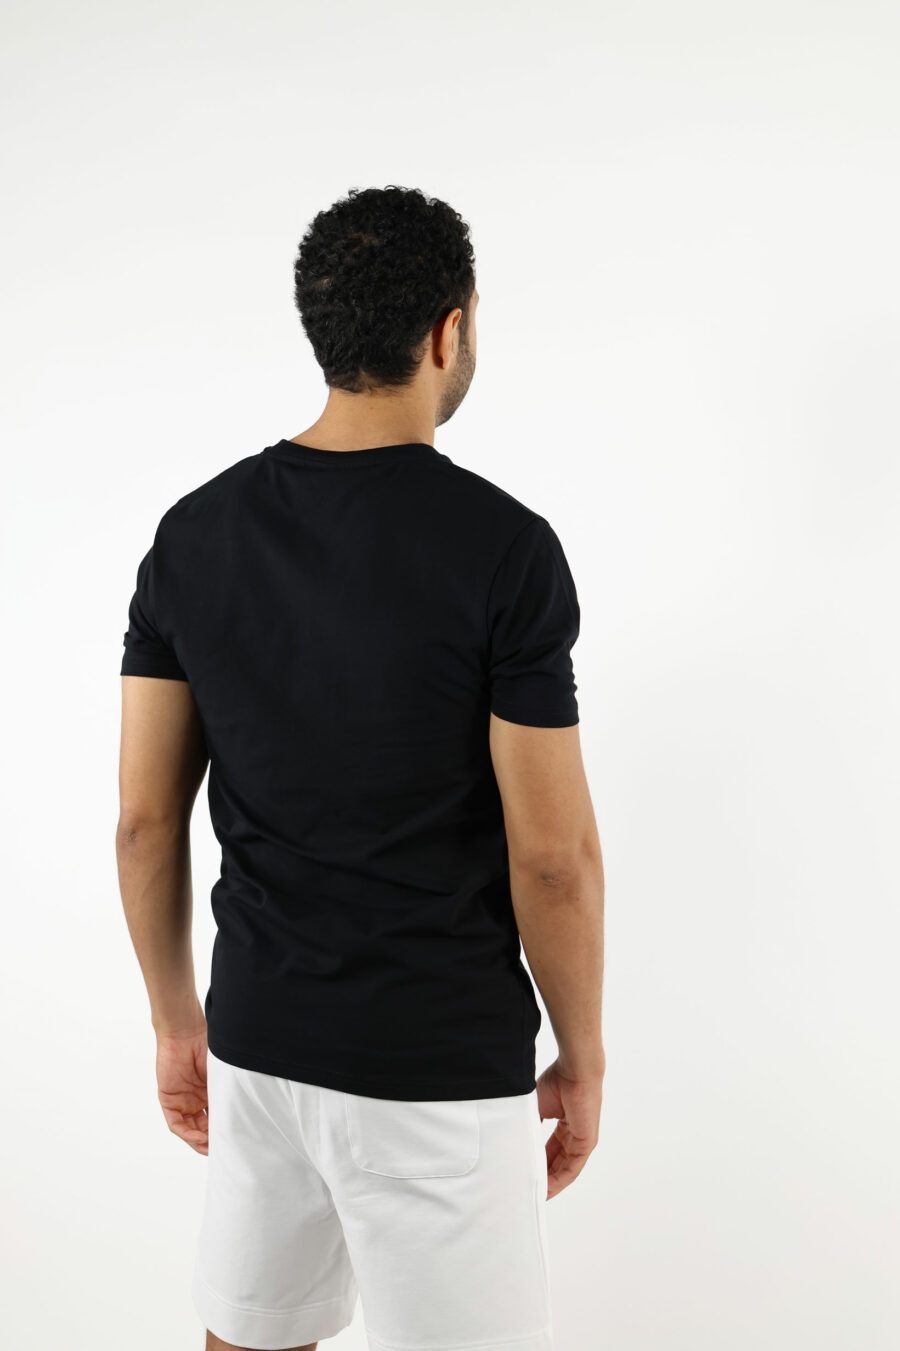 Camiseta negra con minilogo parche oso "underbear" - 111036